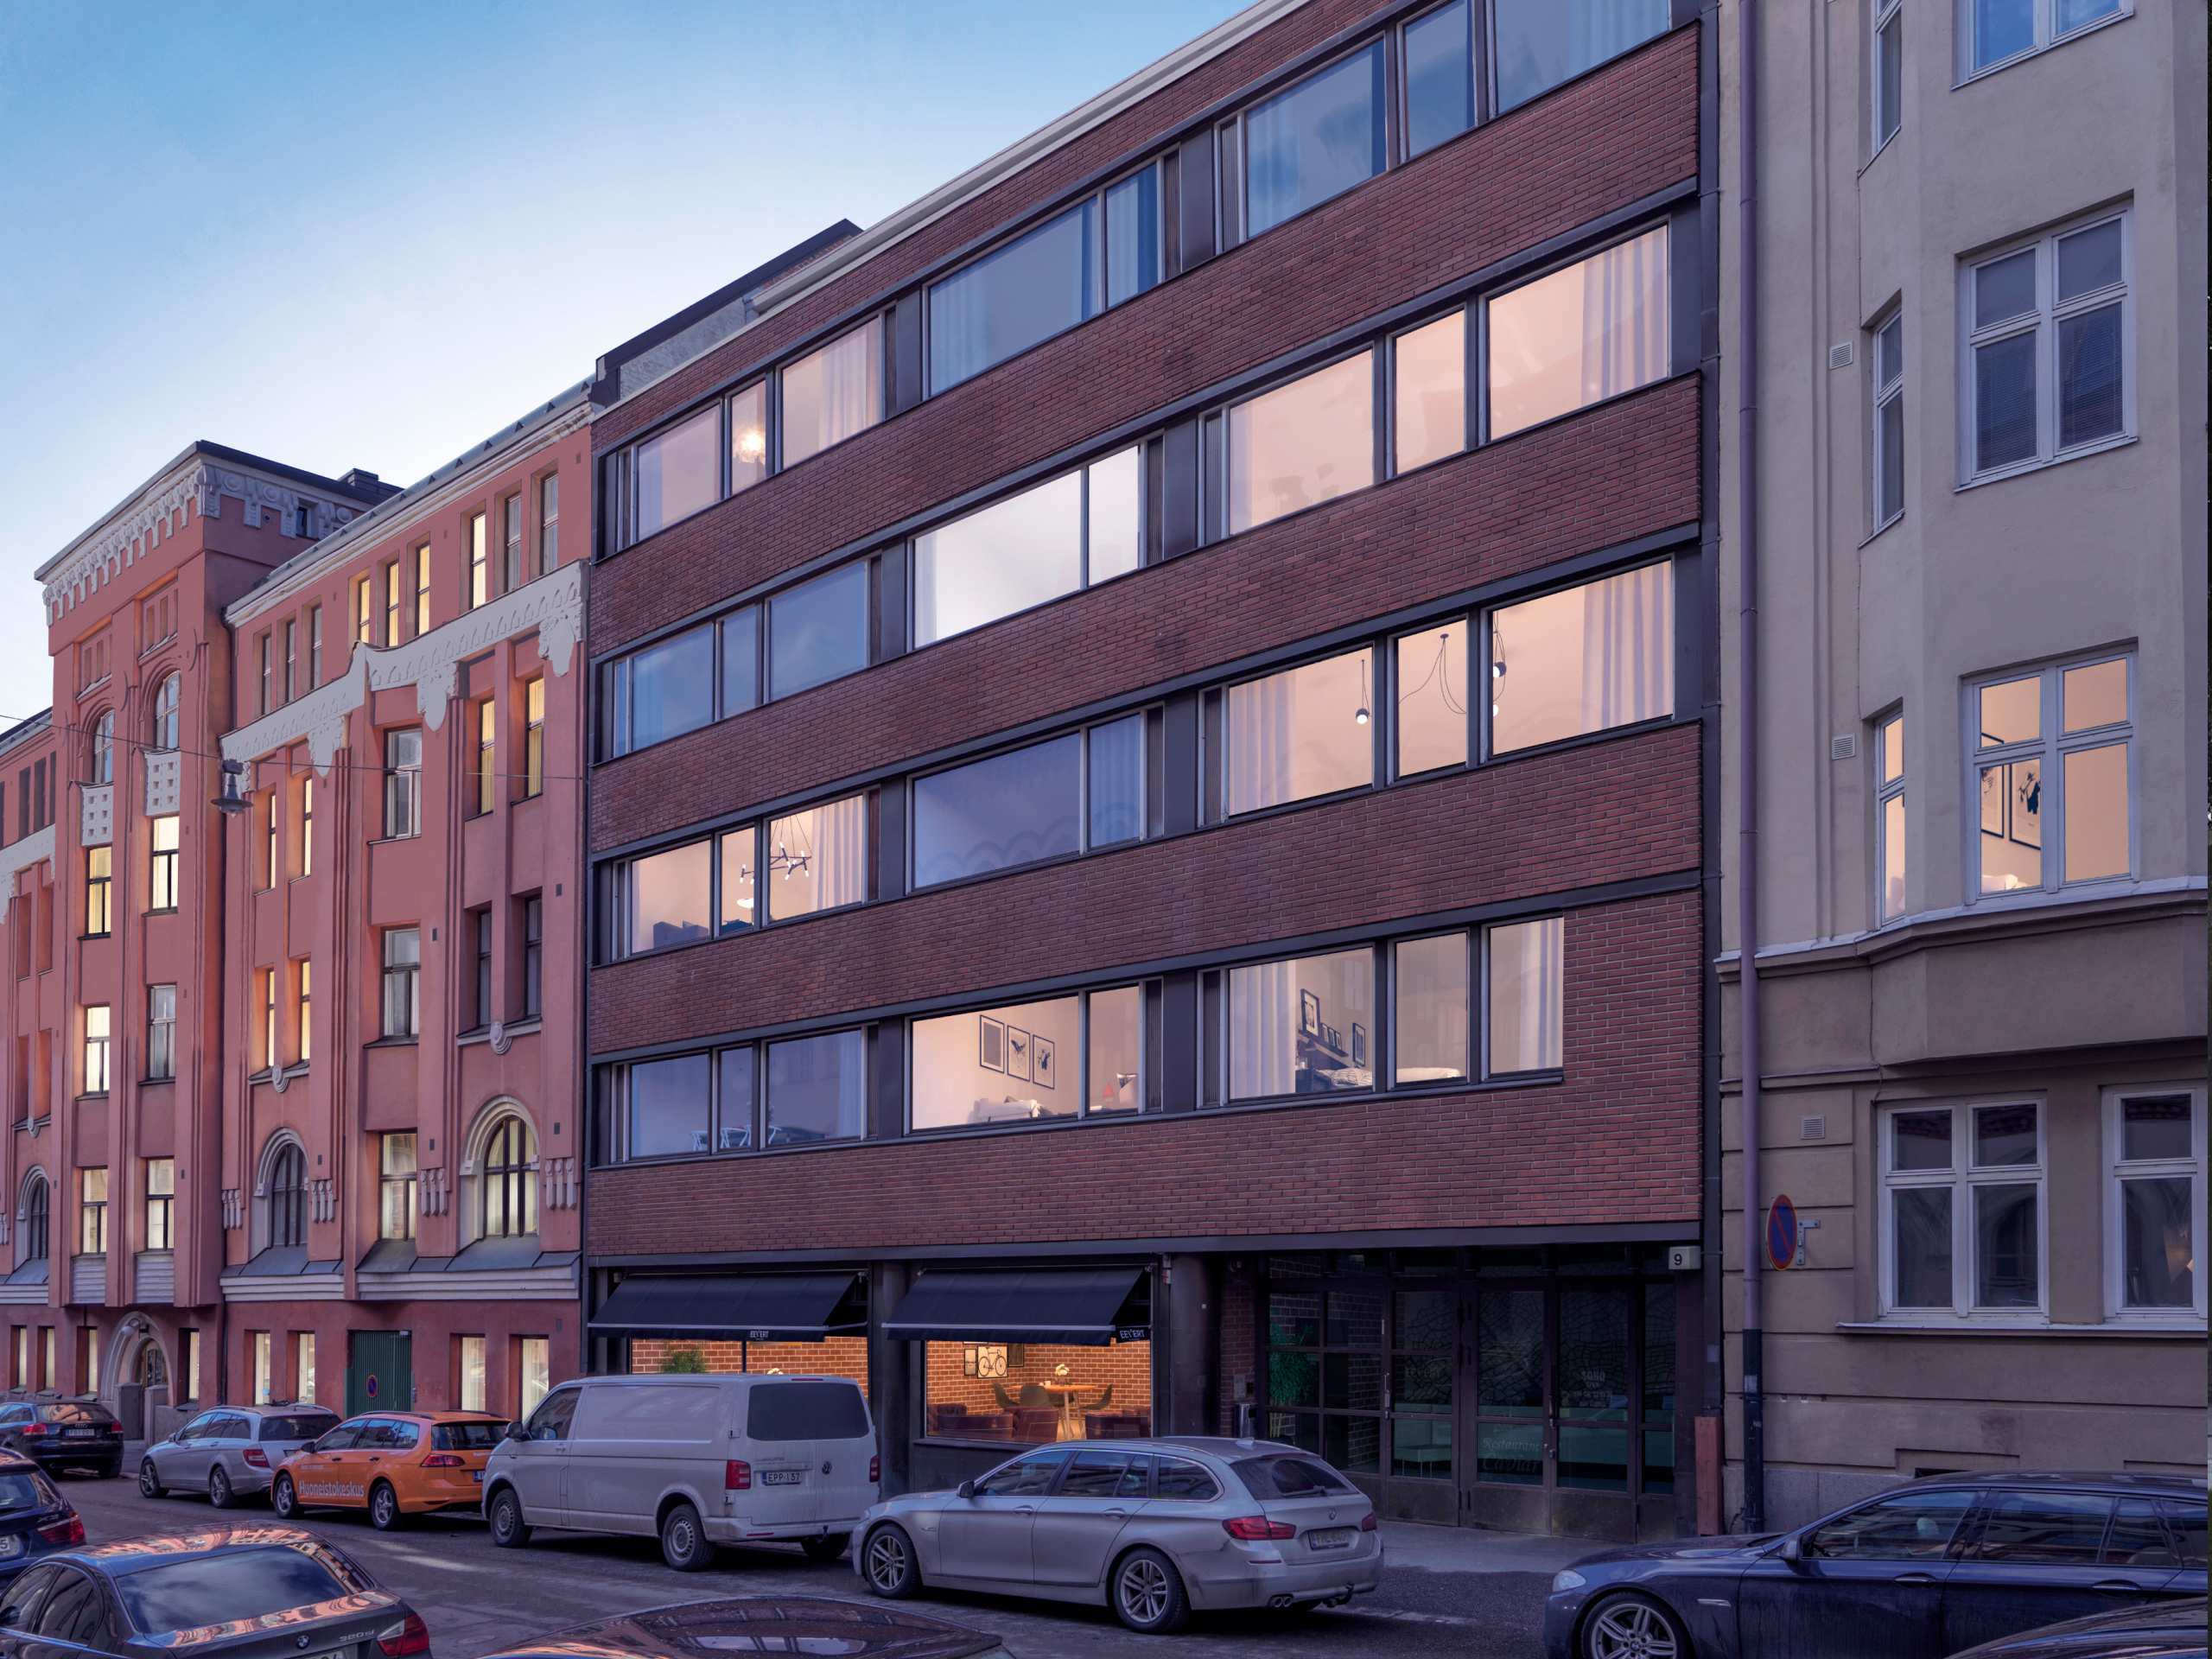 Building designed by Alvar Aalto has been transformed into apartments